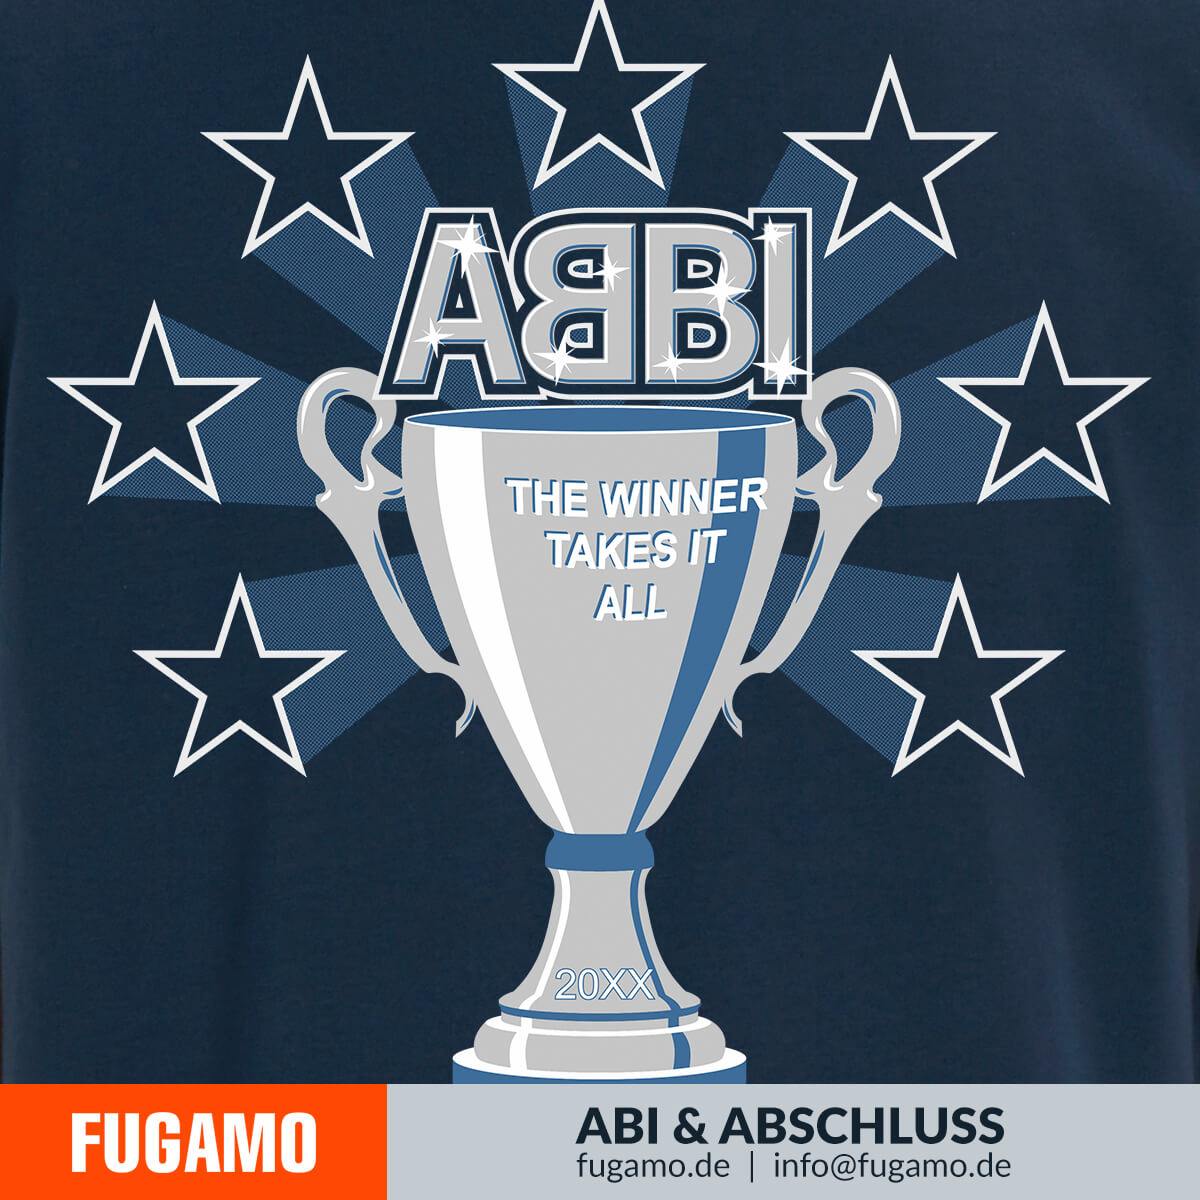 ABBI - The winner takes it all